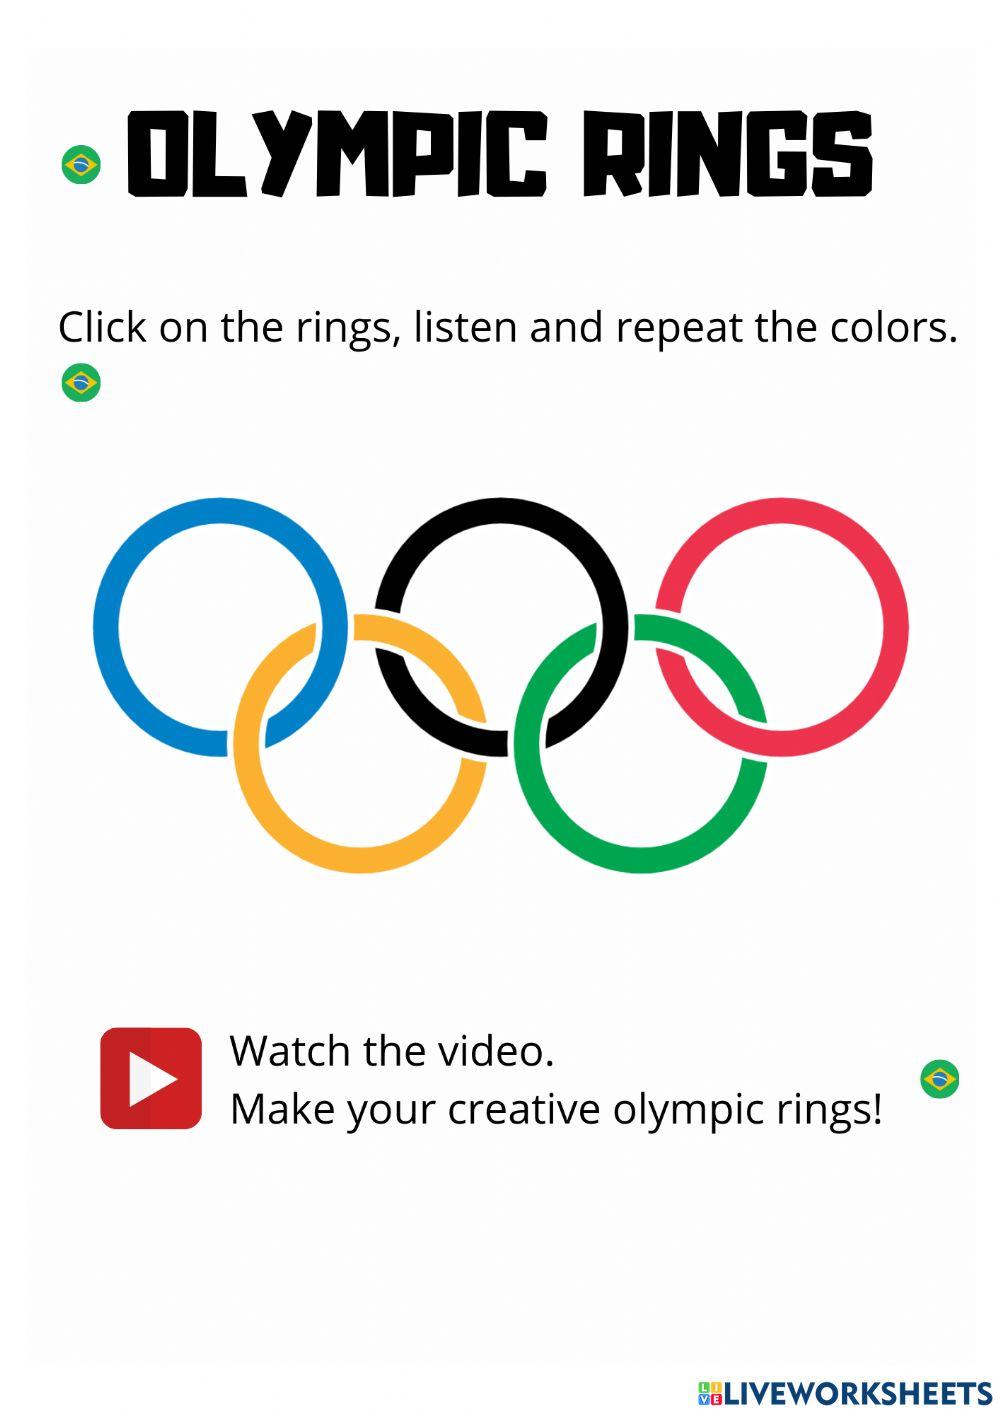 Olympic Rings Decoration - Hoosier Homemade